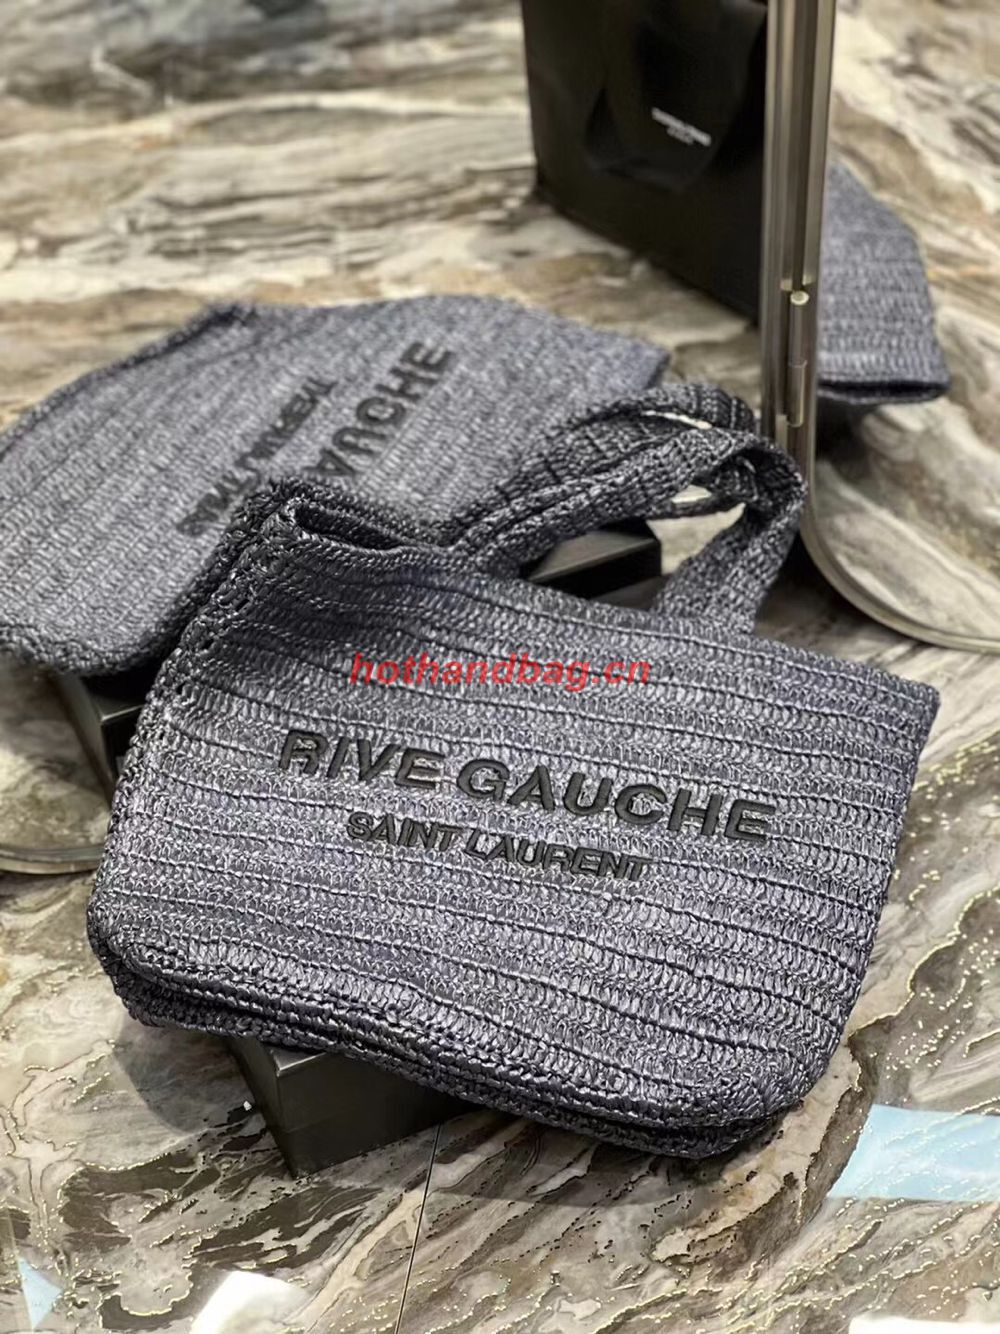 SAINT LAURENT RIVE GAUCHE SUPPLE TOTE BAG IN RAFFIA CROCHET 688864 black